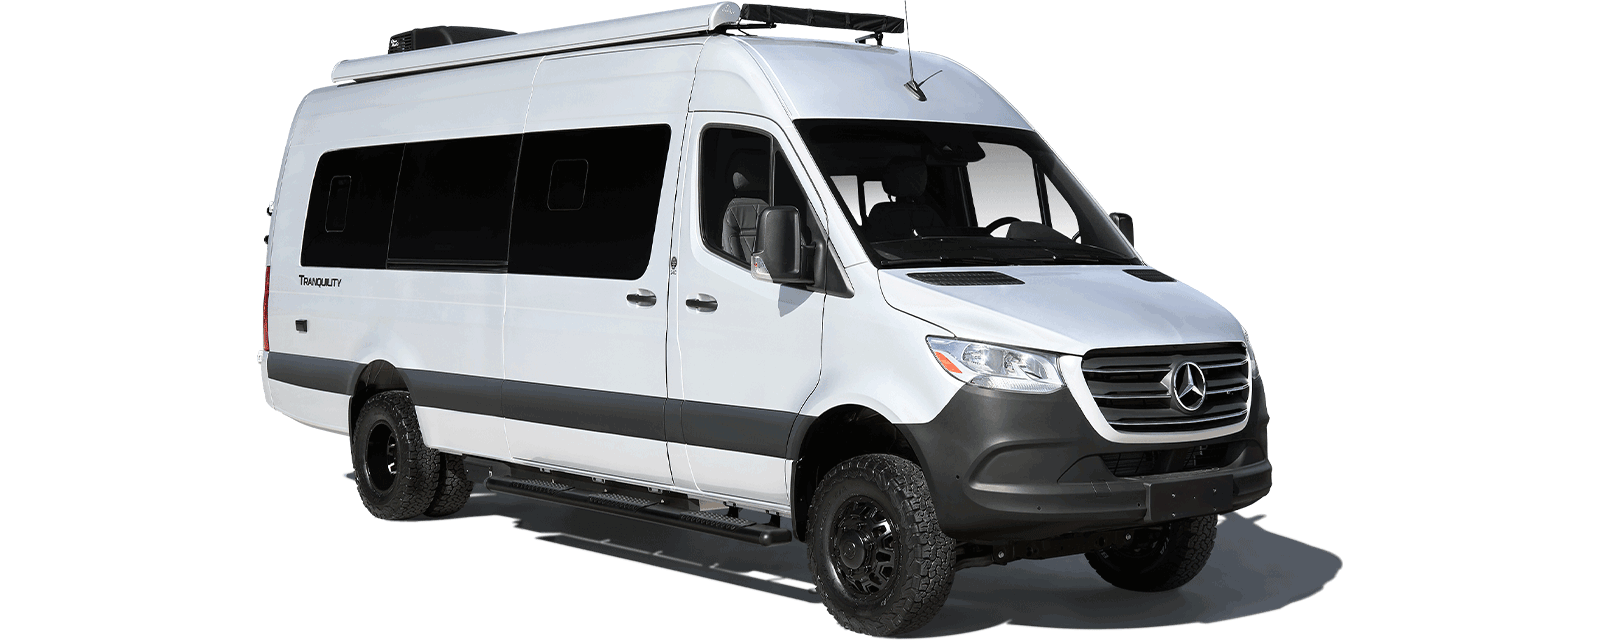 Thor Tranquility® Mercedes Sprinter Vans - Thor Motor Coach